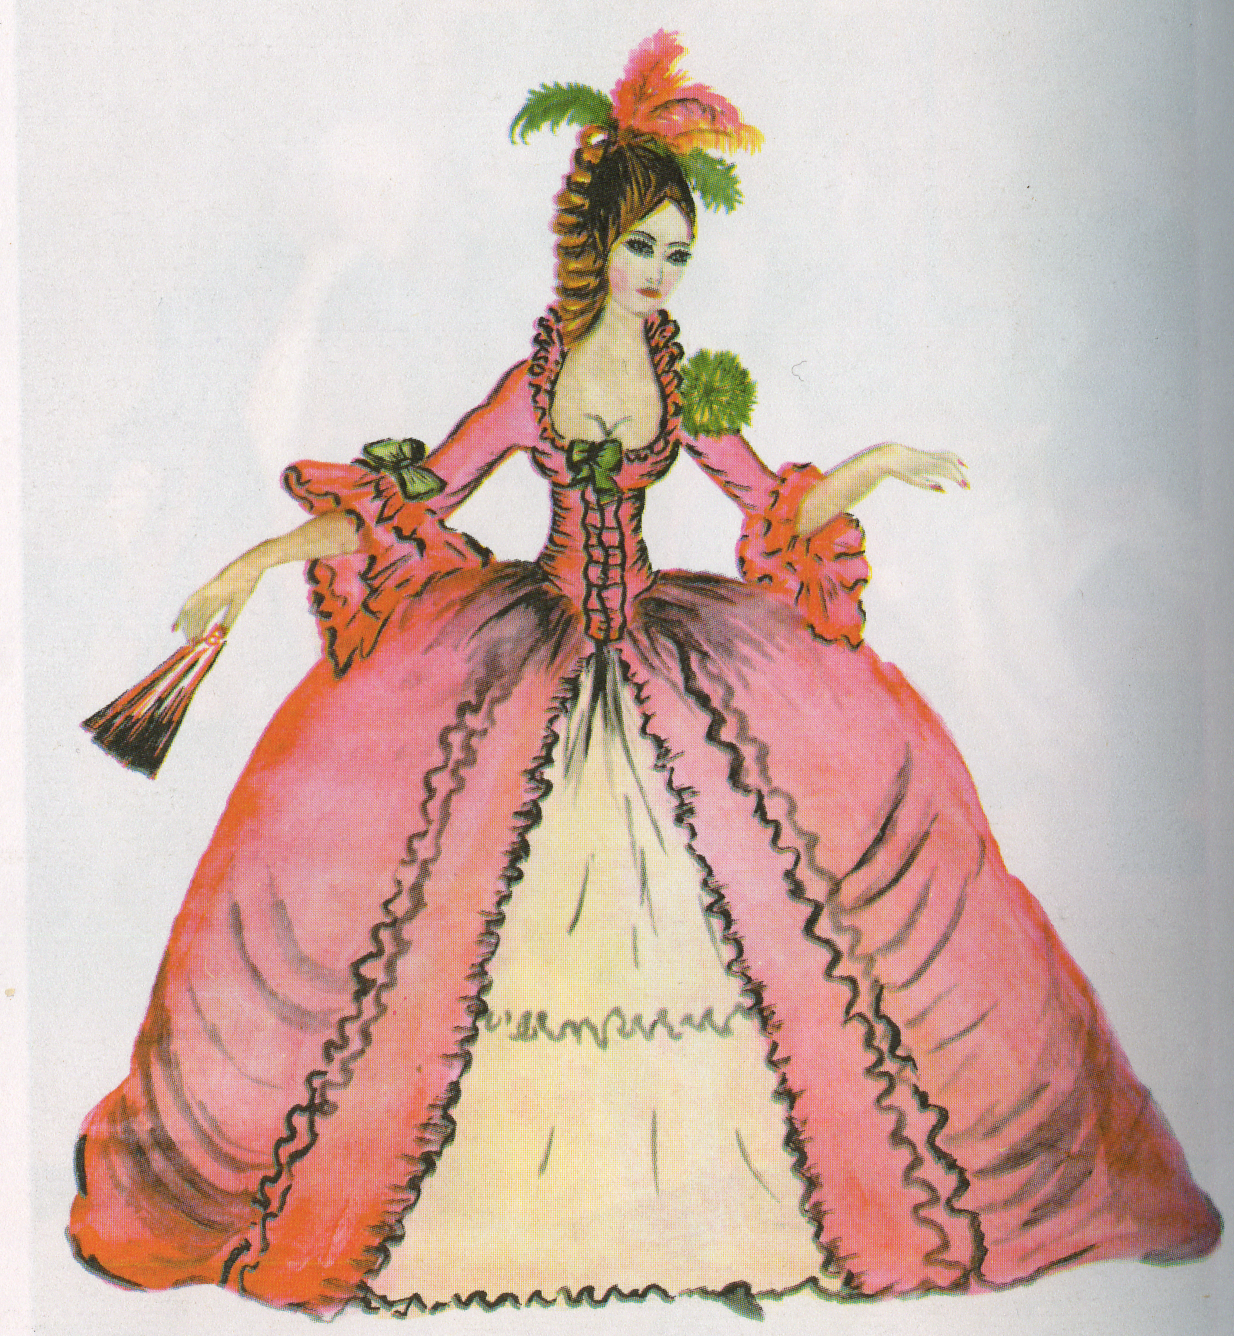 Рисунок 5 класс барокко. Костюм эпохи Барокко. Платья эпохи Барокко. Французский костюм стиля Барокко. Платье в стиле Барокко рисунок.